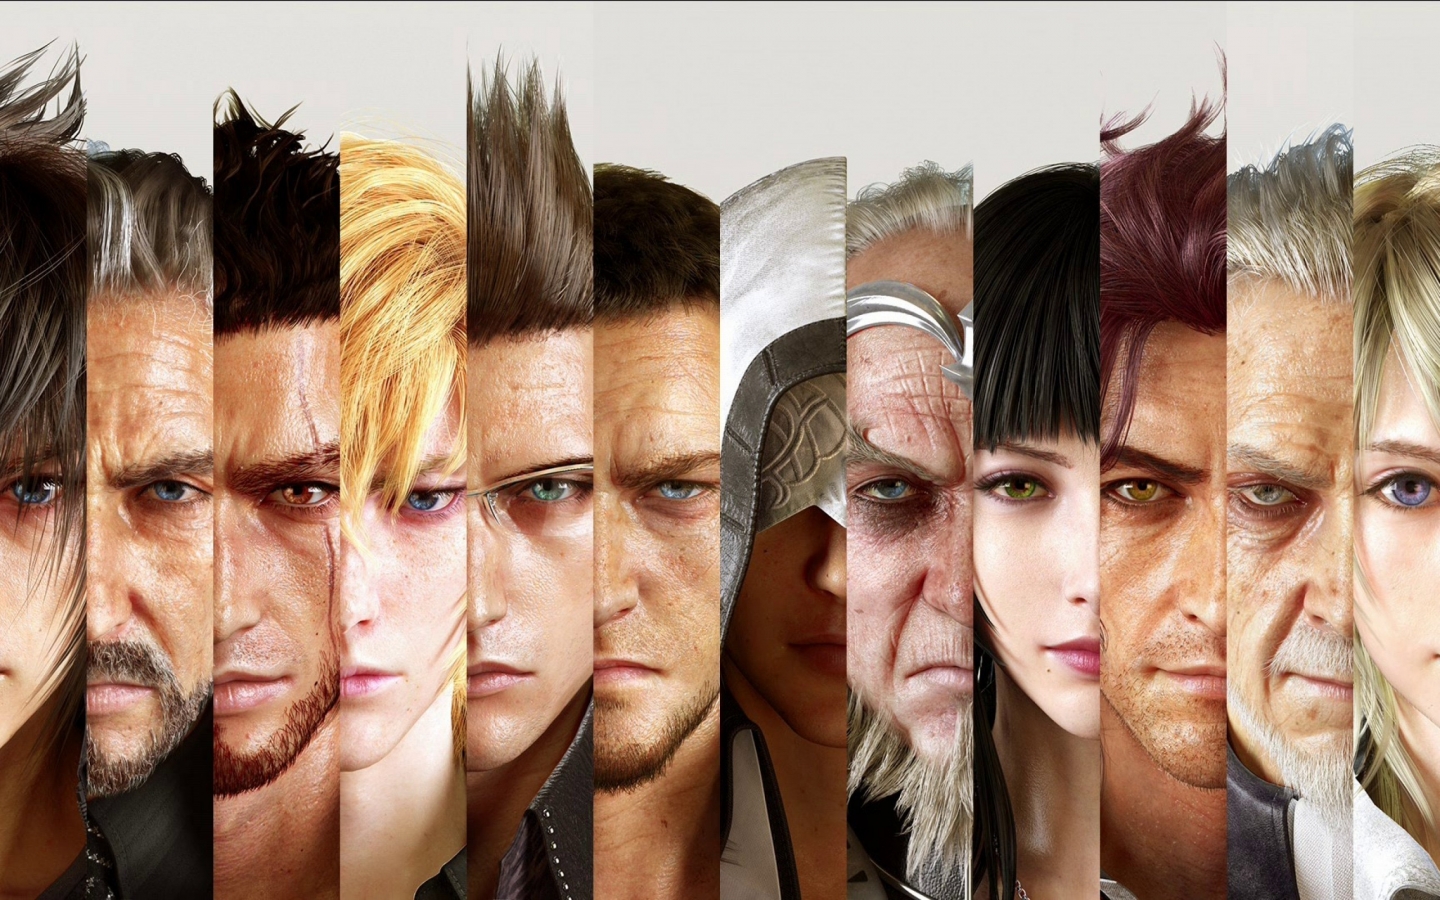 Final Fantasy XV Cast for 1440 x 900 widescreen resolution